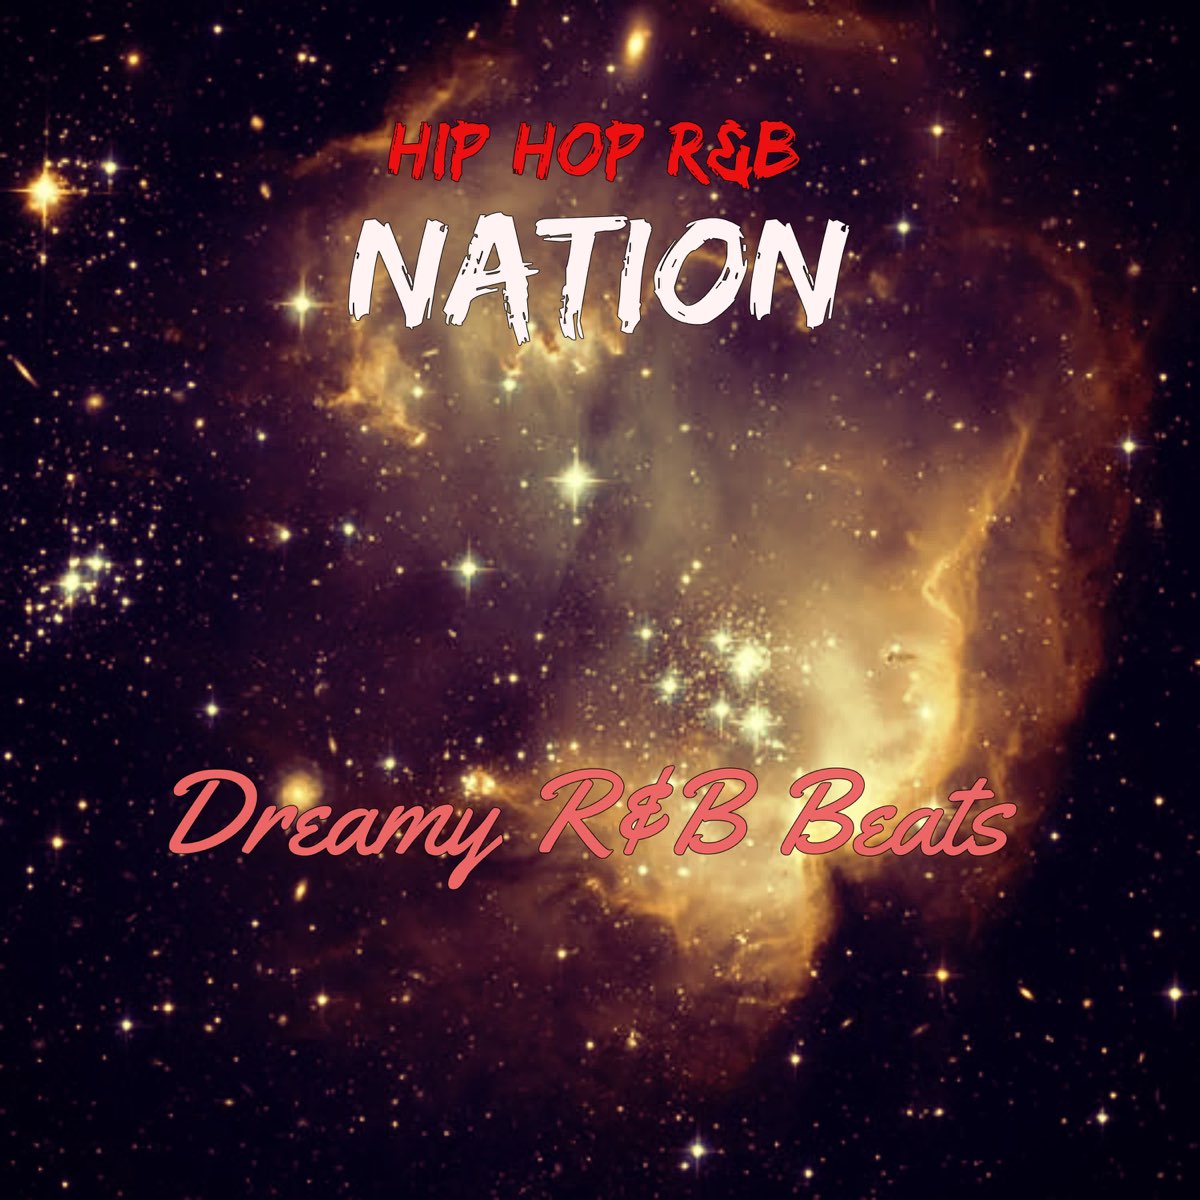 Dreamy R&B Beats by Hip R&B Nation on Apple Music